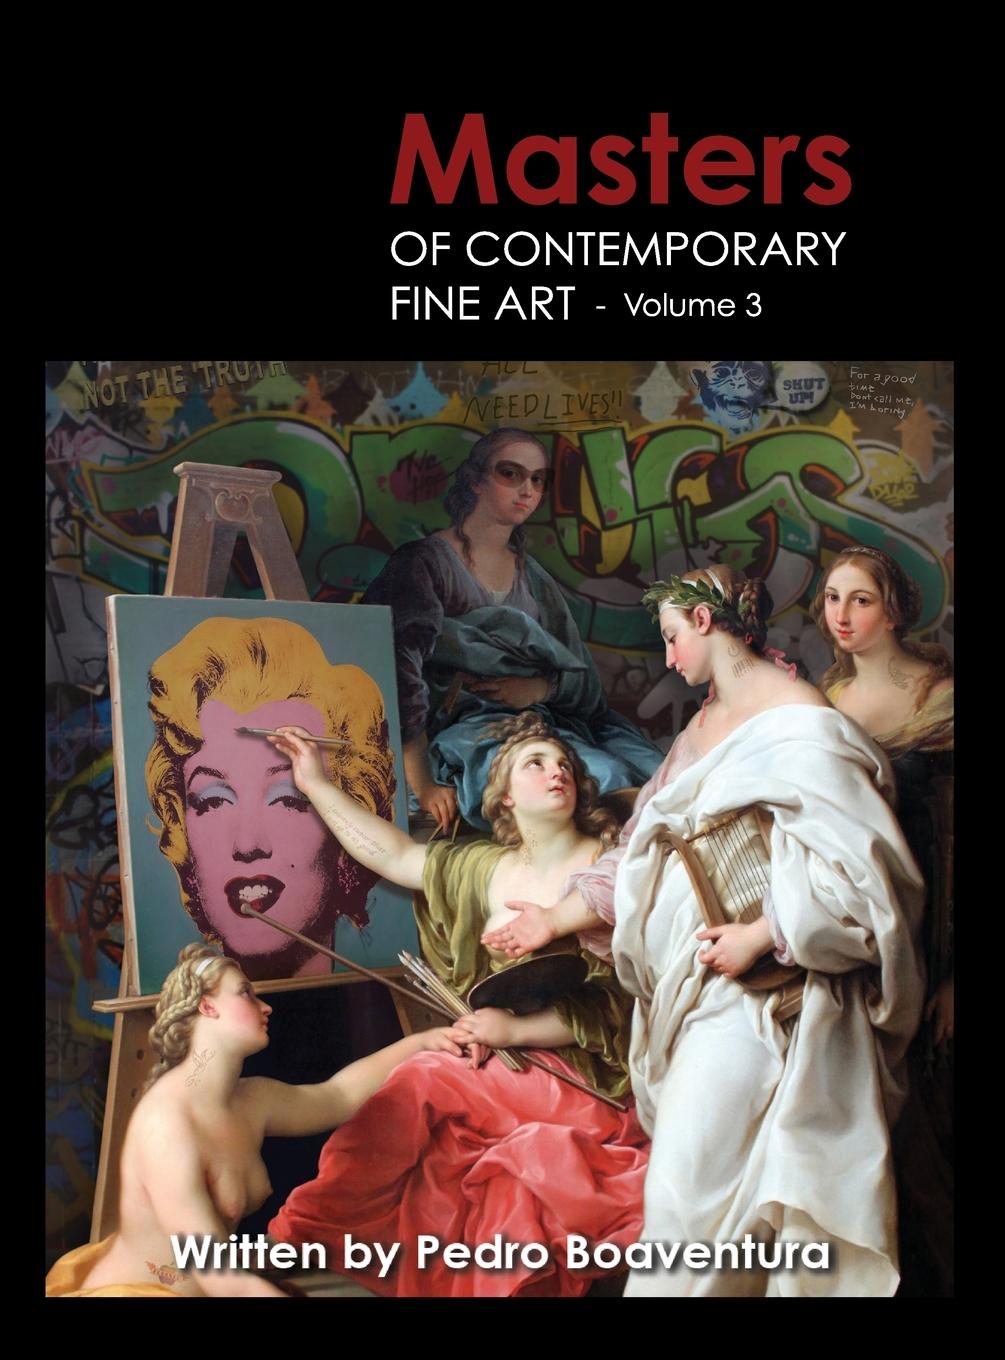 Masters of Contemporary Fine Art Book Collection - Volume 3 (Painting, Sculpture, Drawing, Digital Art) - Galaxie, Art Boaventura, Pedro Artgalaxie. Com